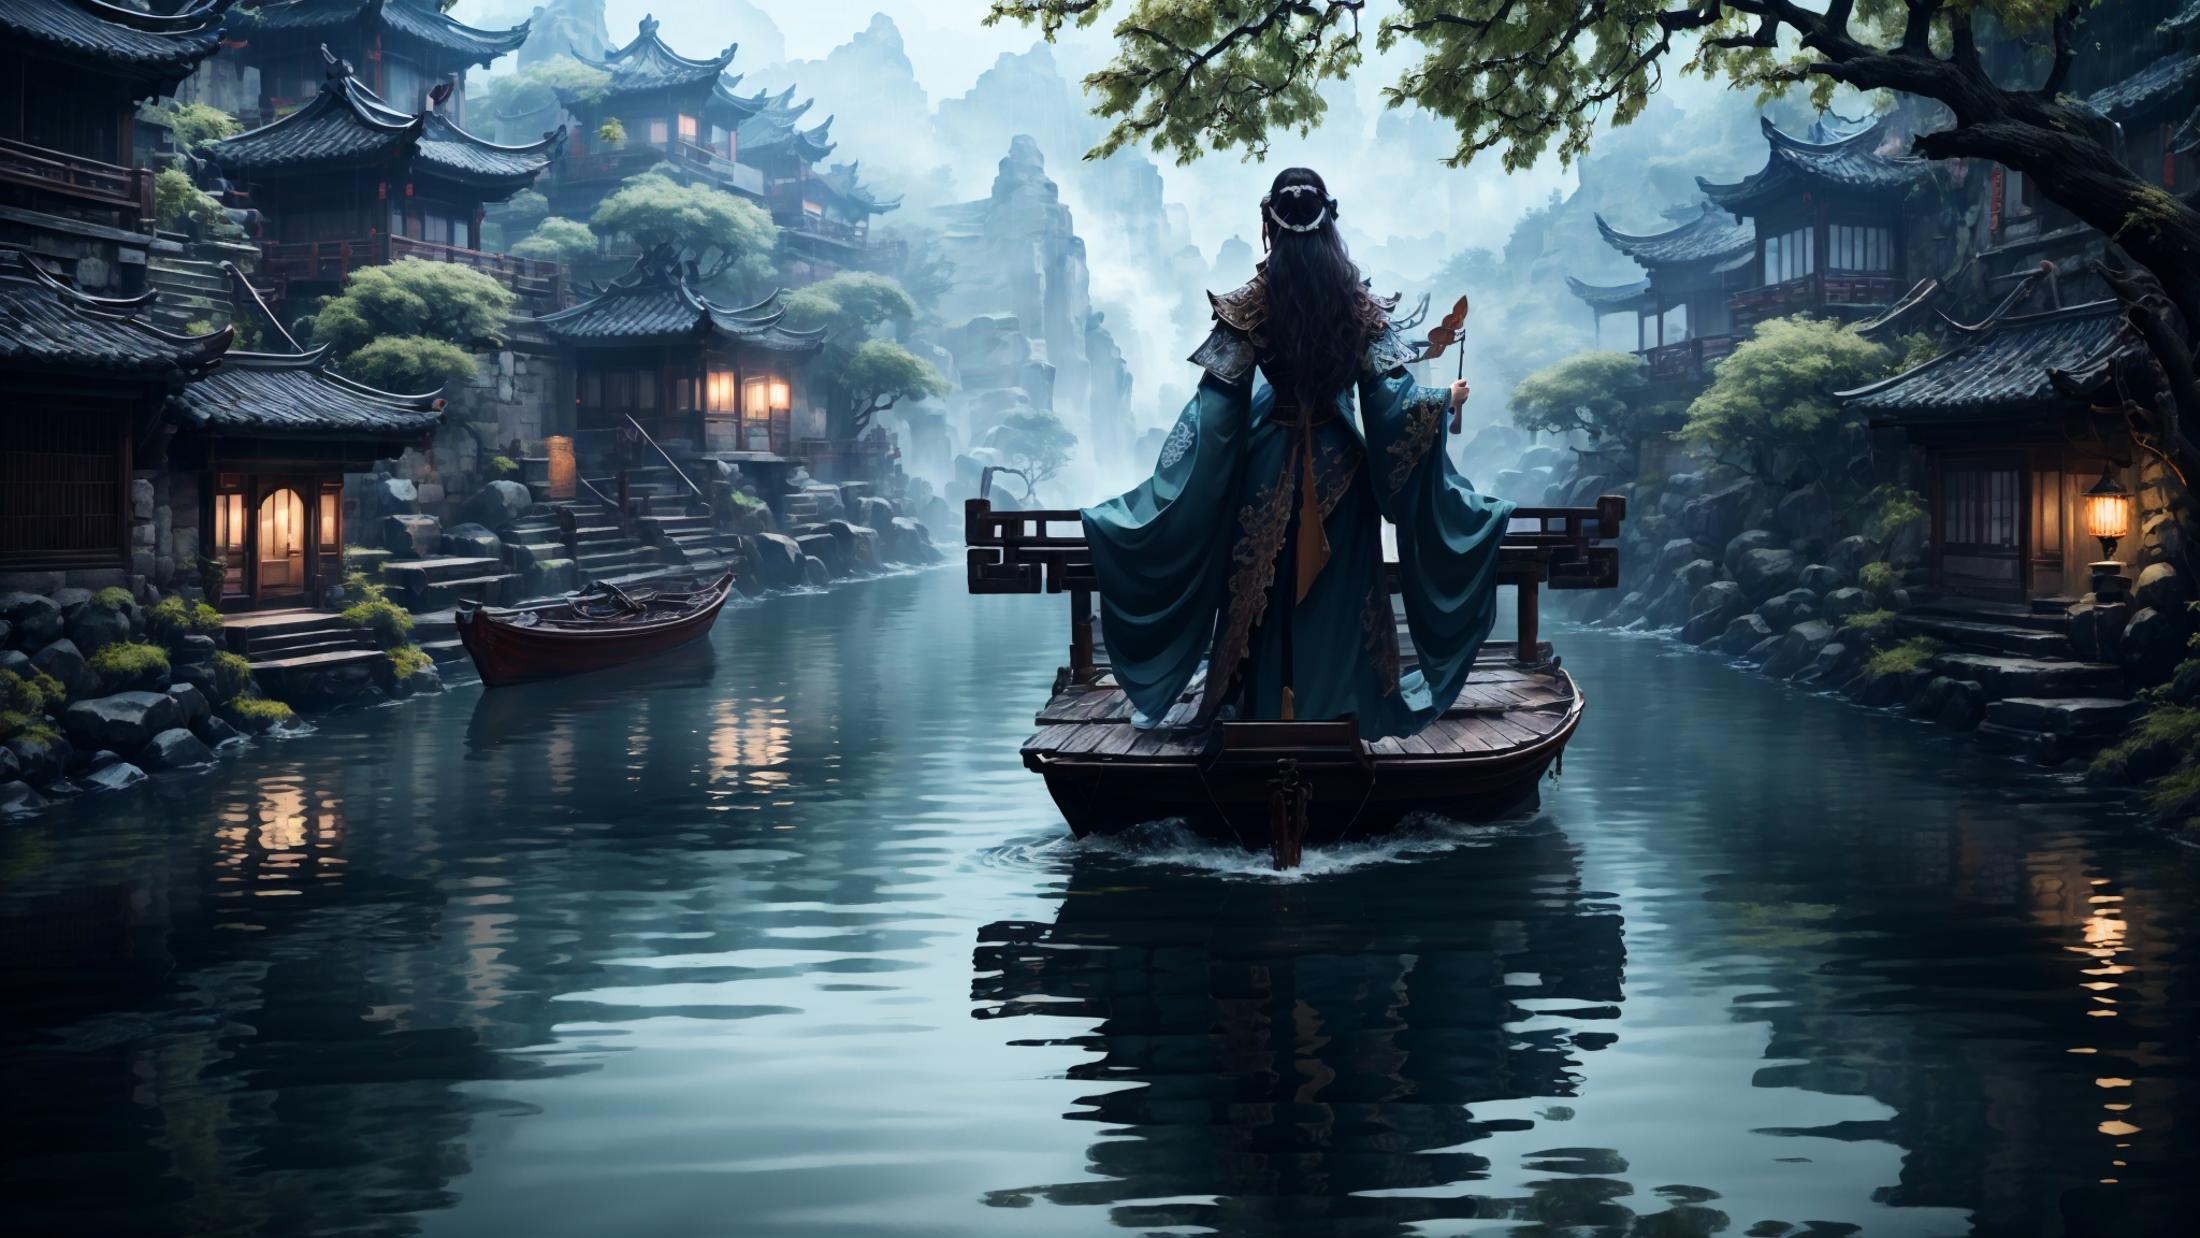 A beautiful woman in a blue kimono rides a boat down a river.